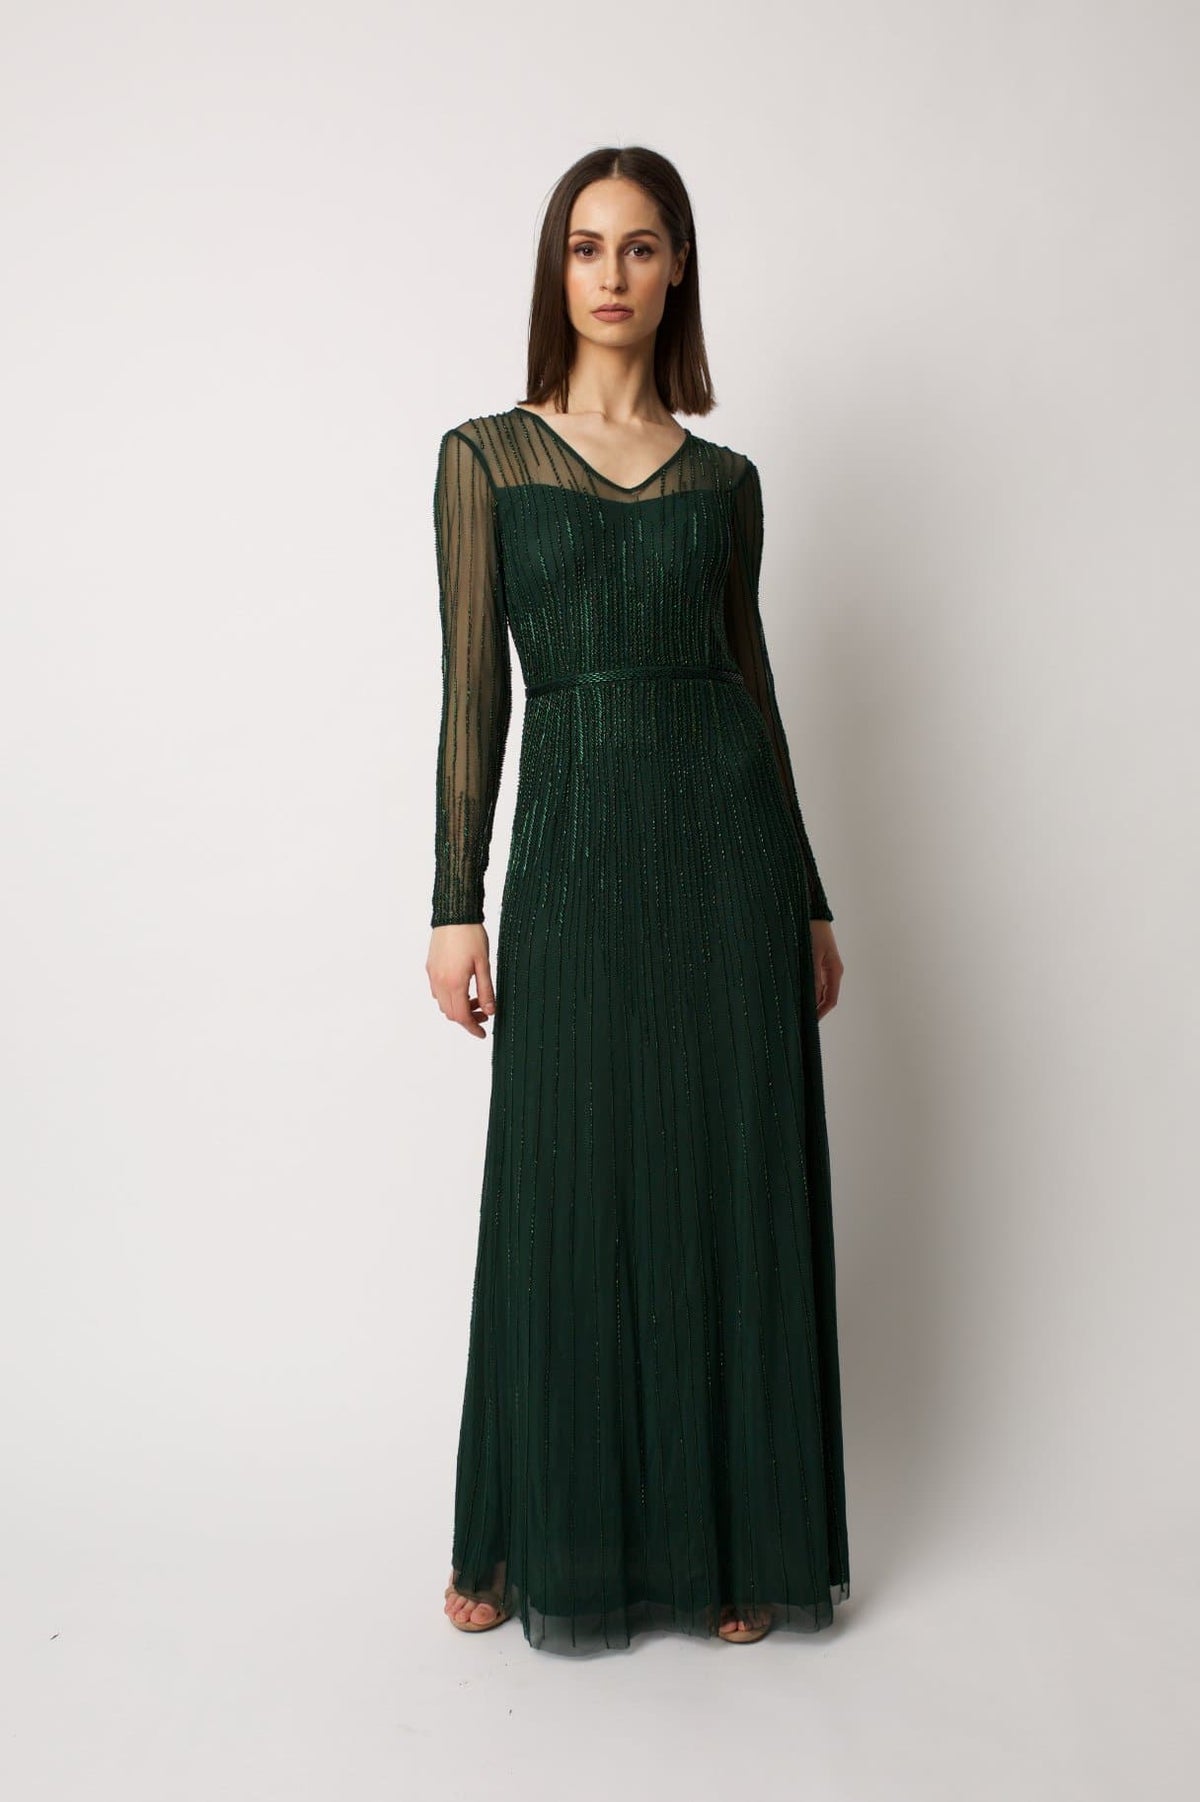 Green Annabella Gown